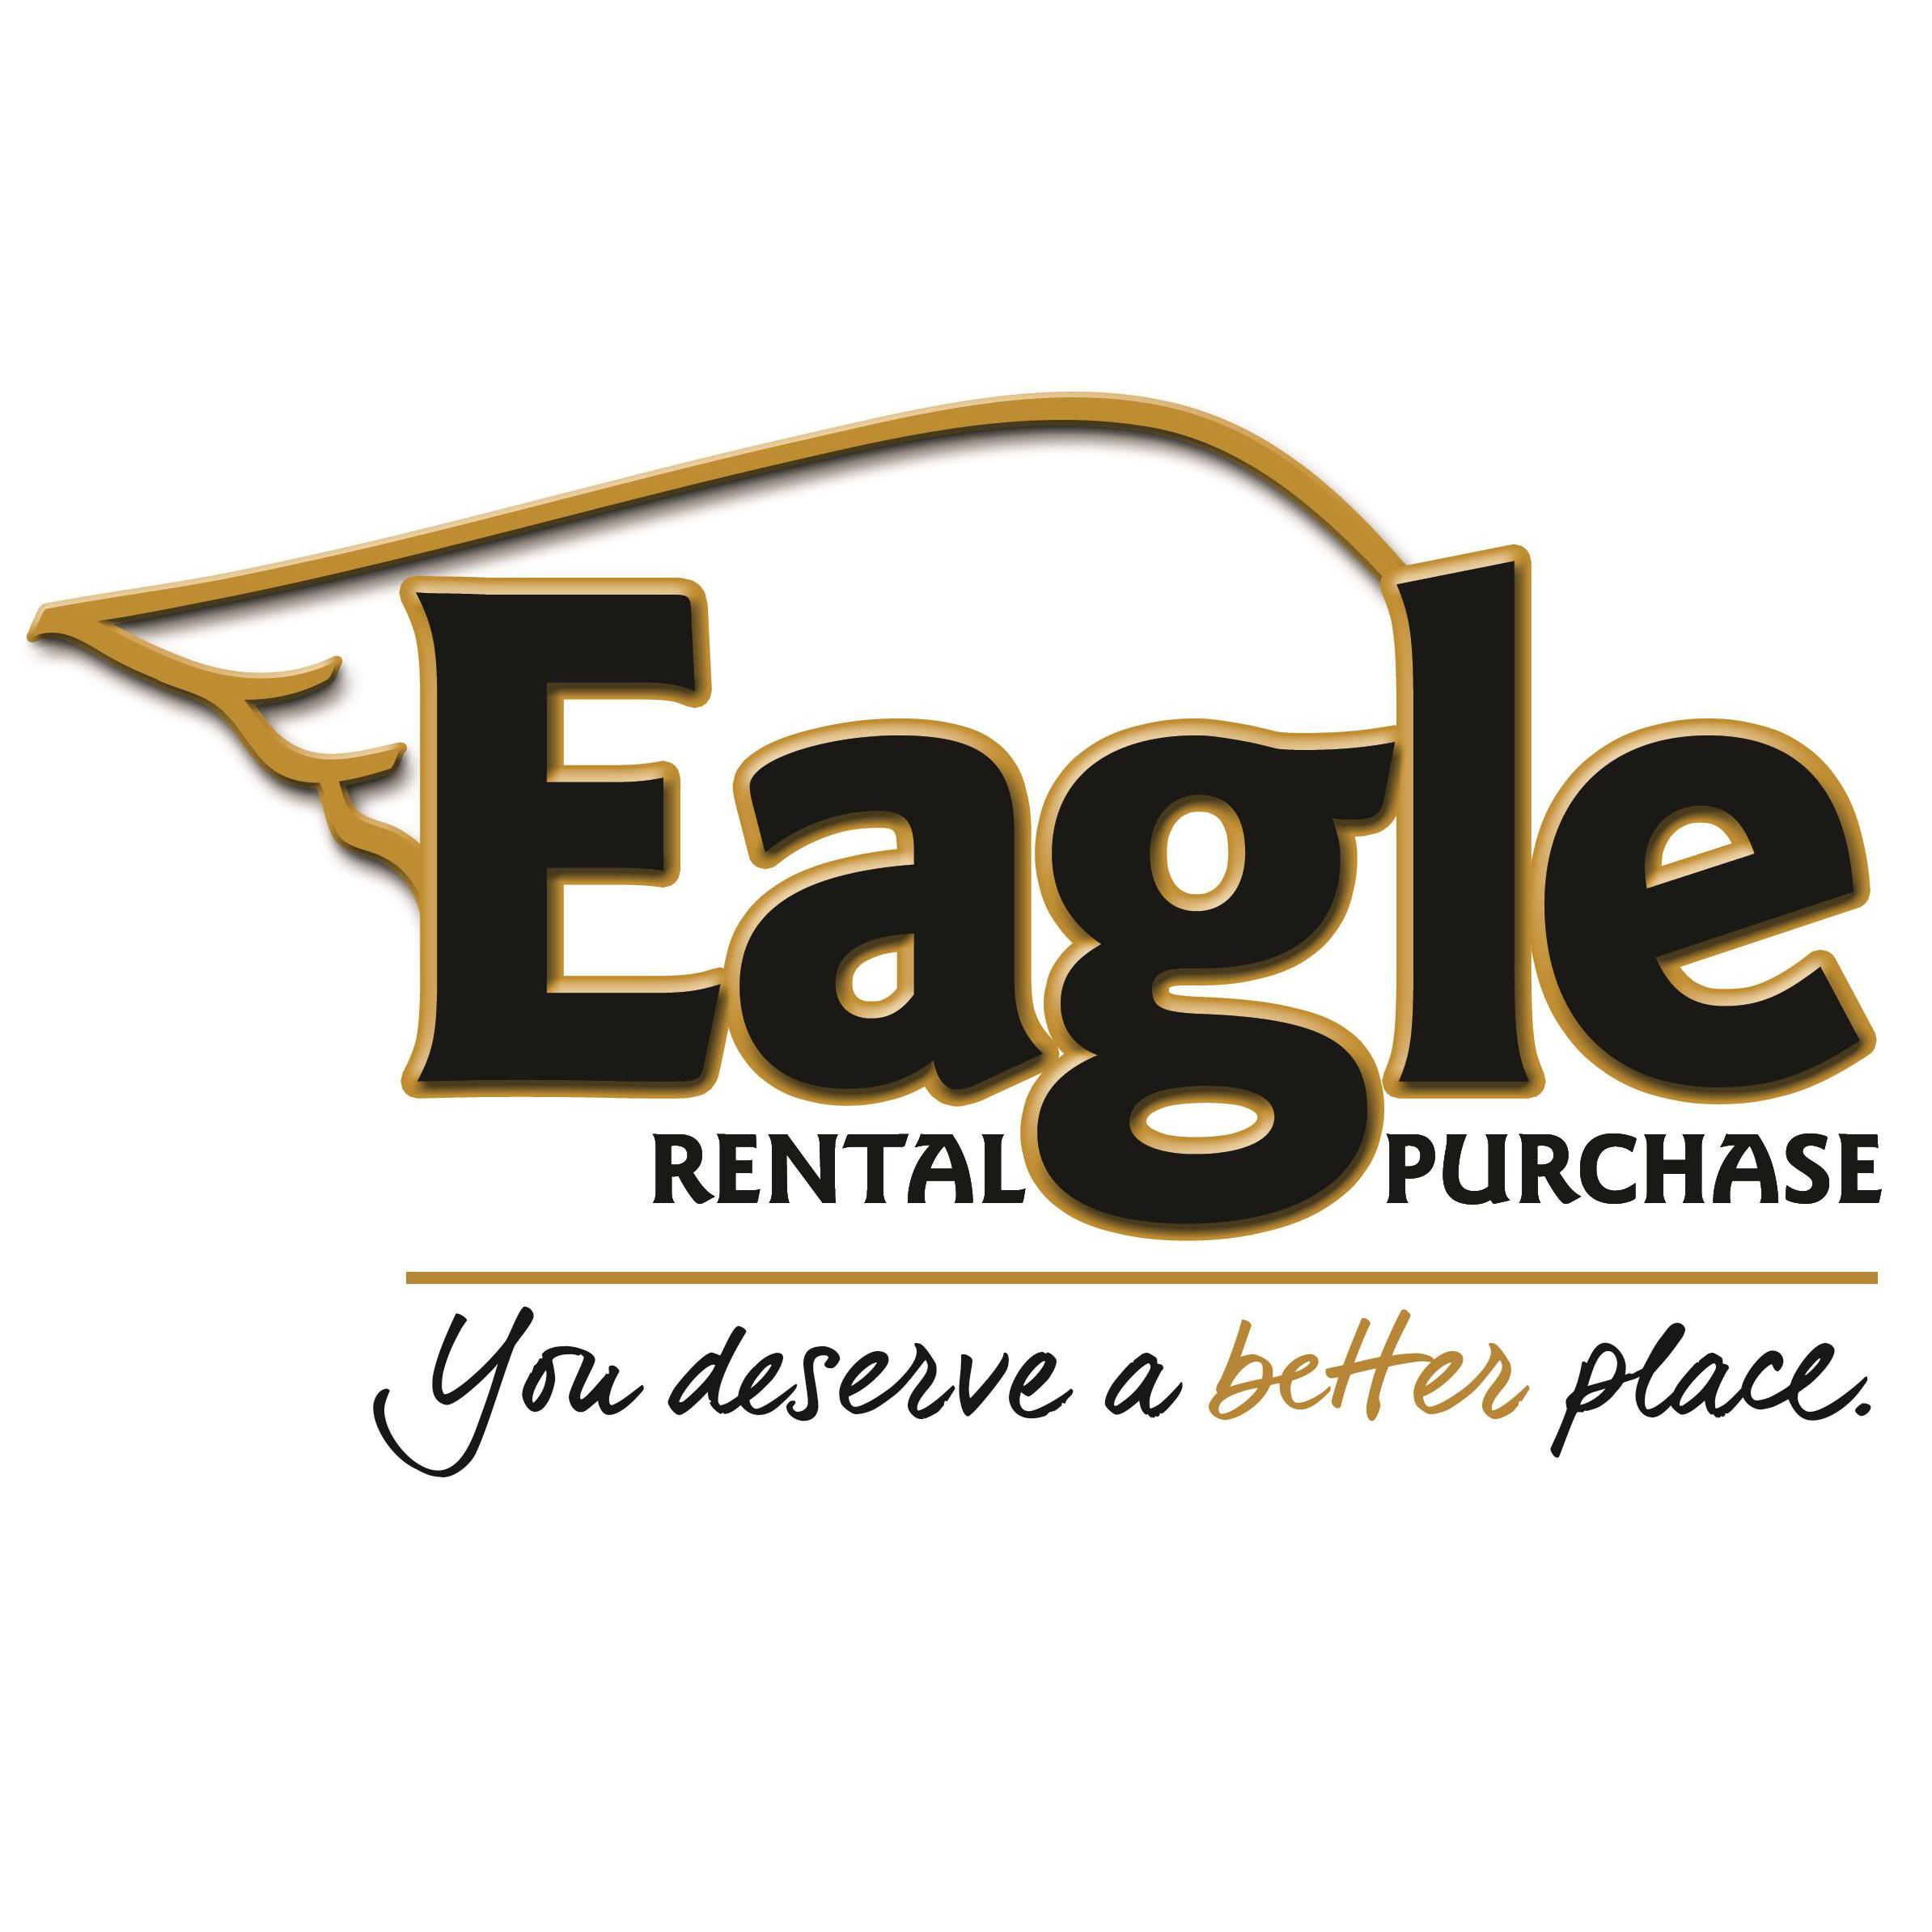 Eagle Rental Purchase - Ashtabula, OH 44004 - (440)992-2800 | ShowMeLocal.com